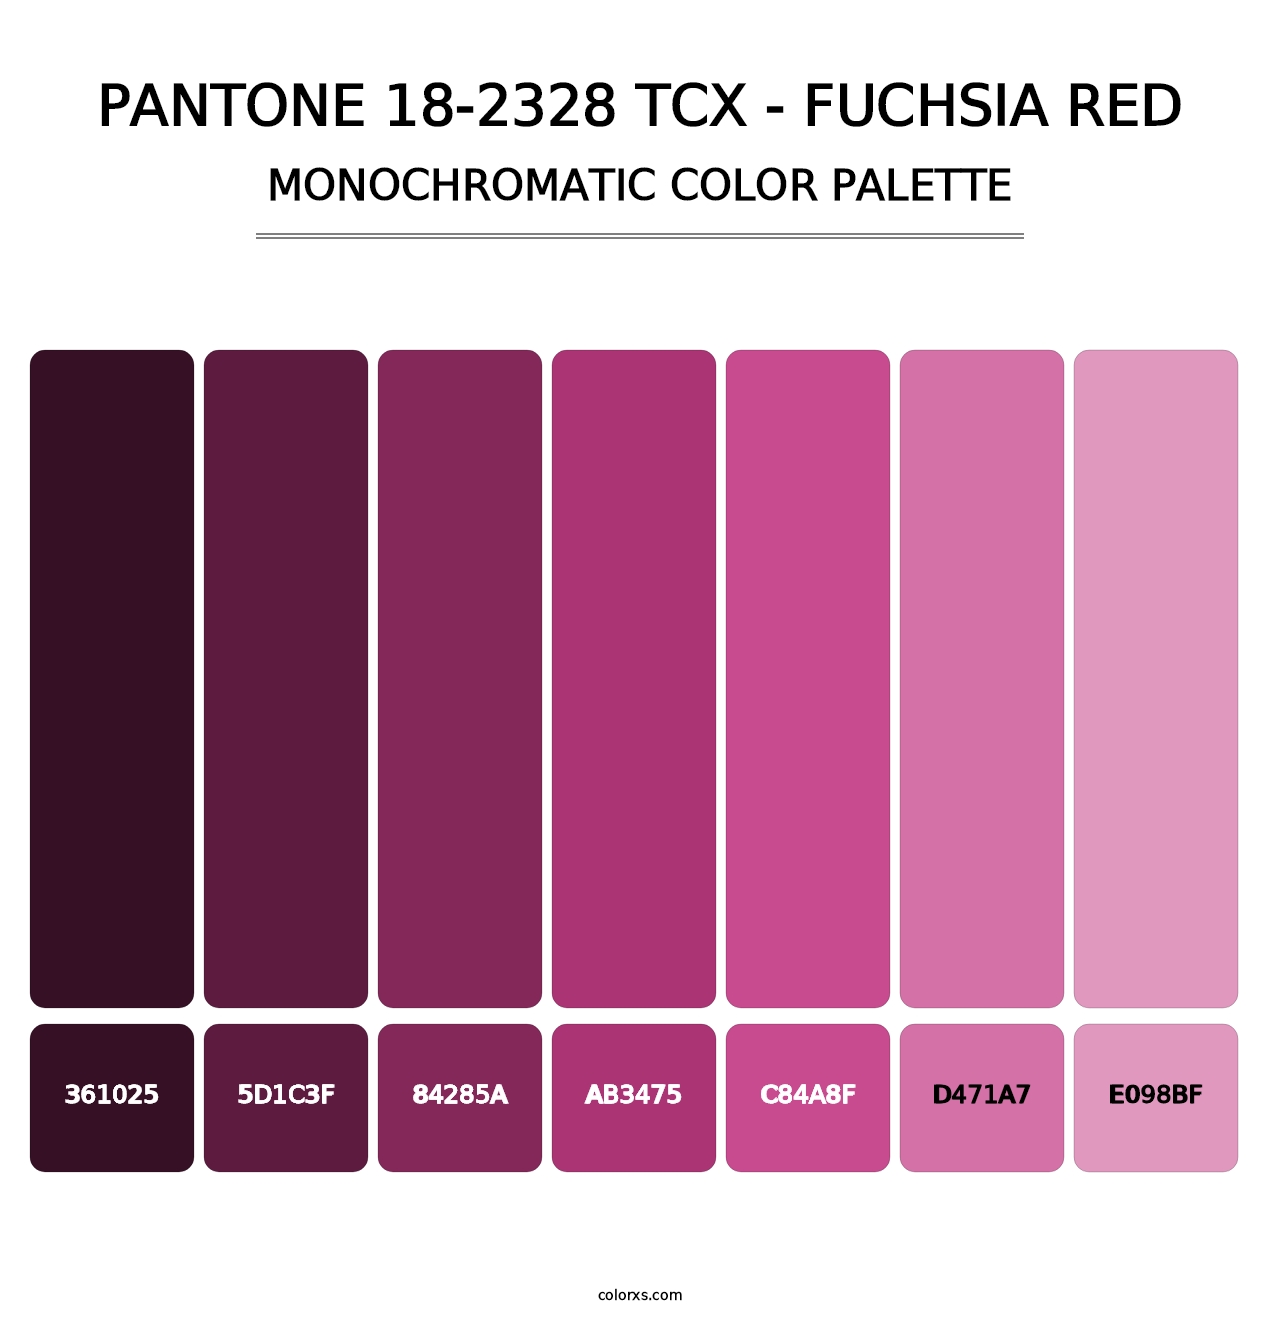 PANTONE 18-2328 TCX - Fuchsia Red - Monochromatic Color Palette